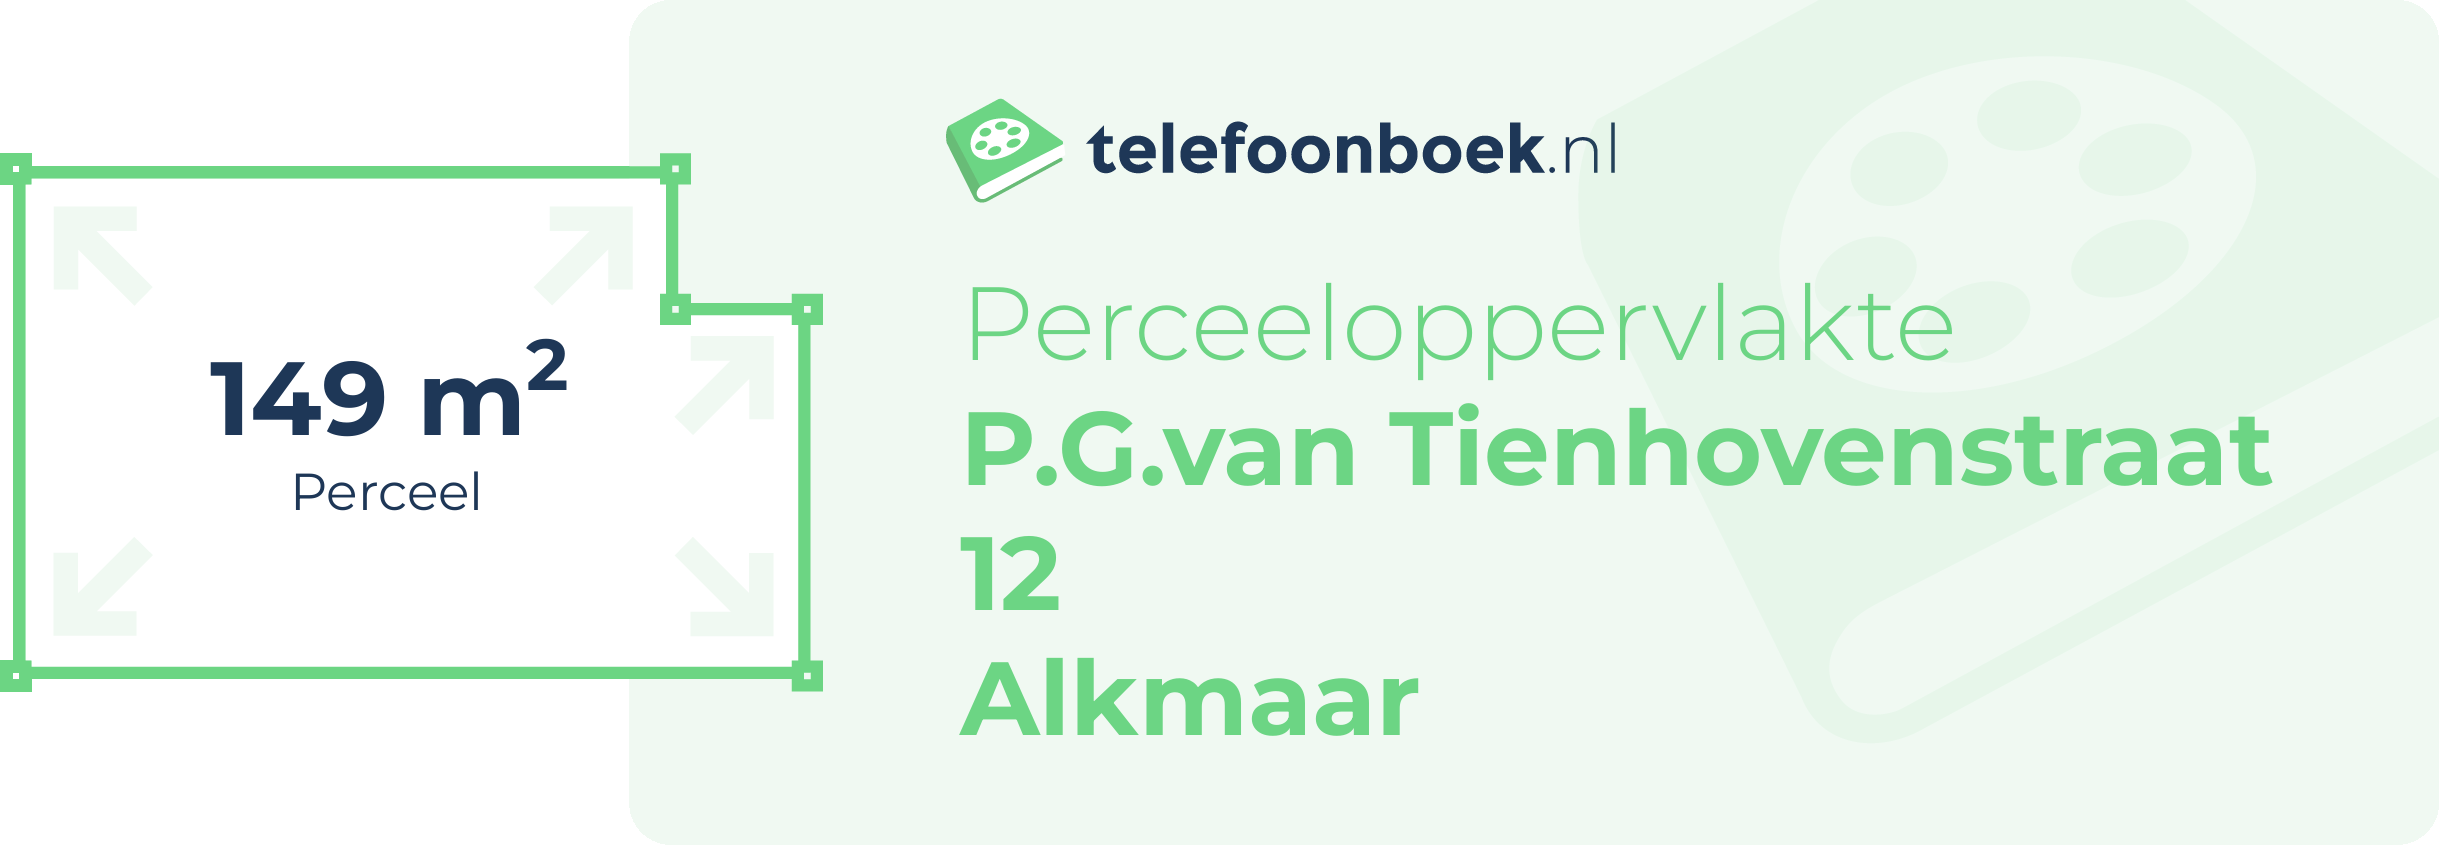 Perceeloppervlakte P.G.van Tienhovenstraat 12 Alkmaar